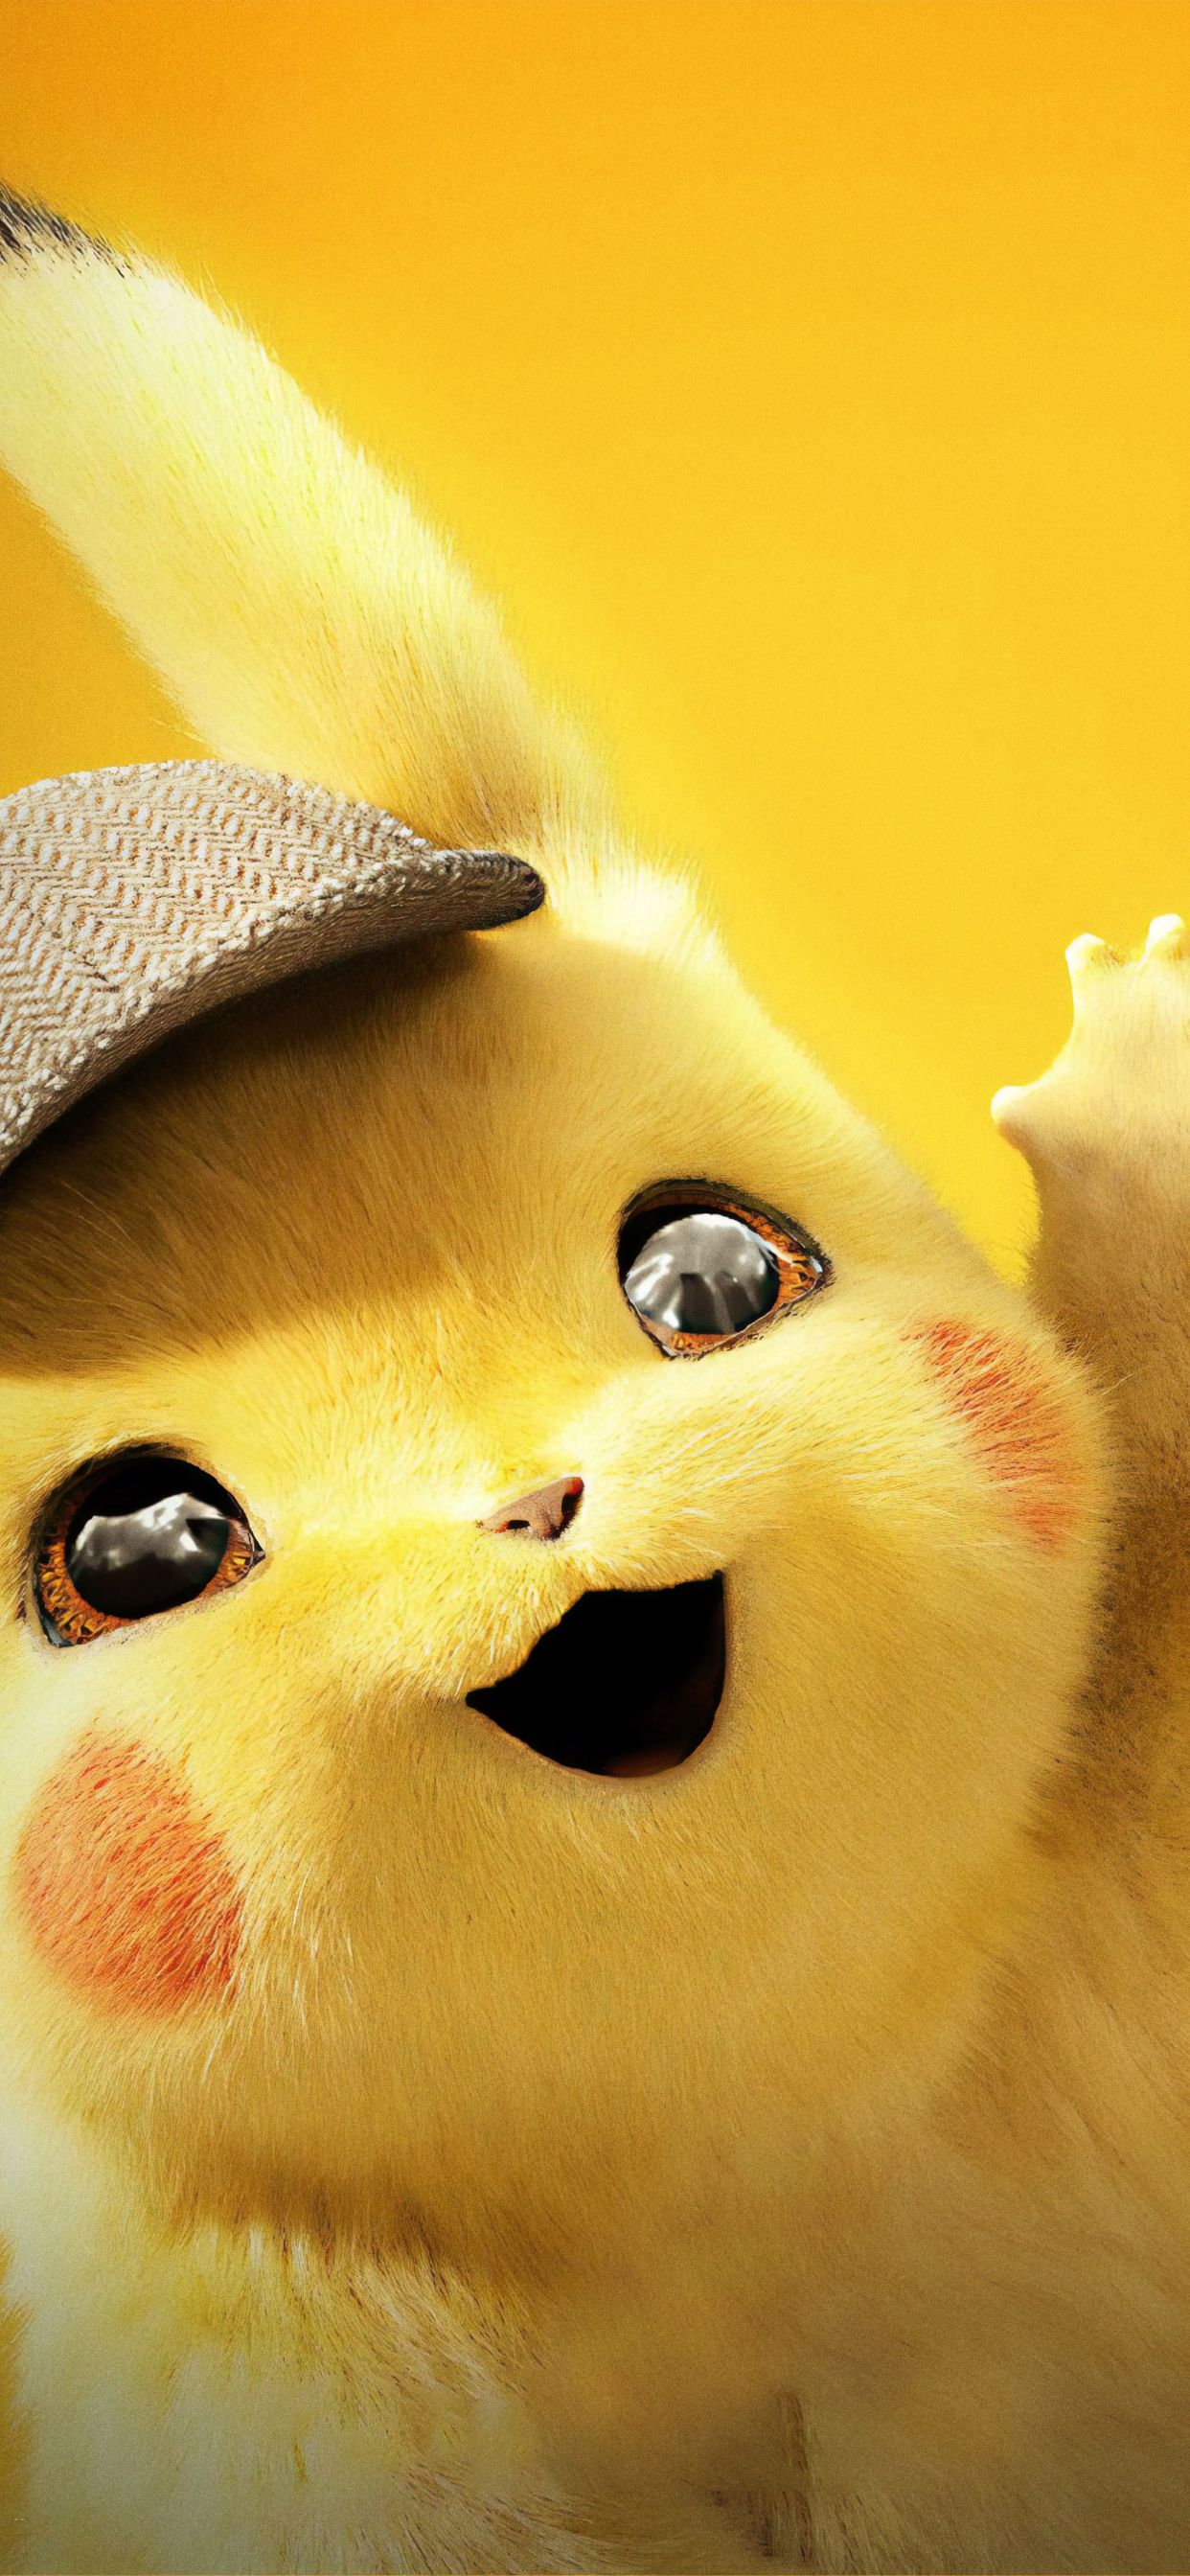 Detective Pikachu iPhone XS MAX Wallpaper, HD Movies 4K